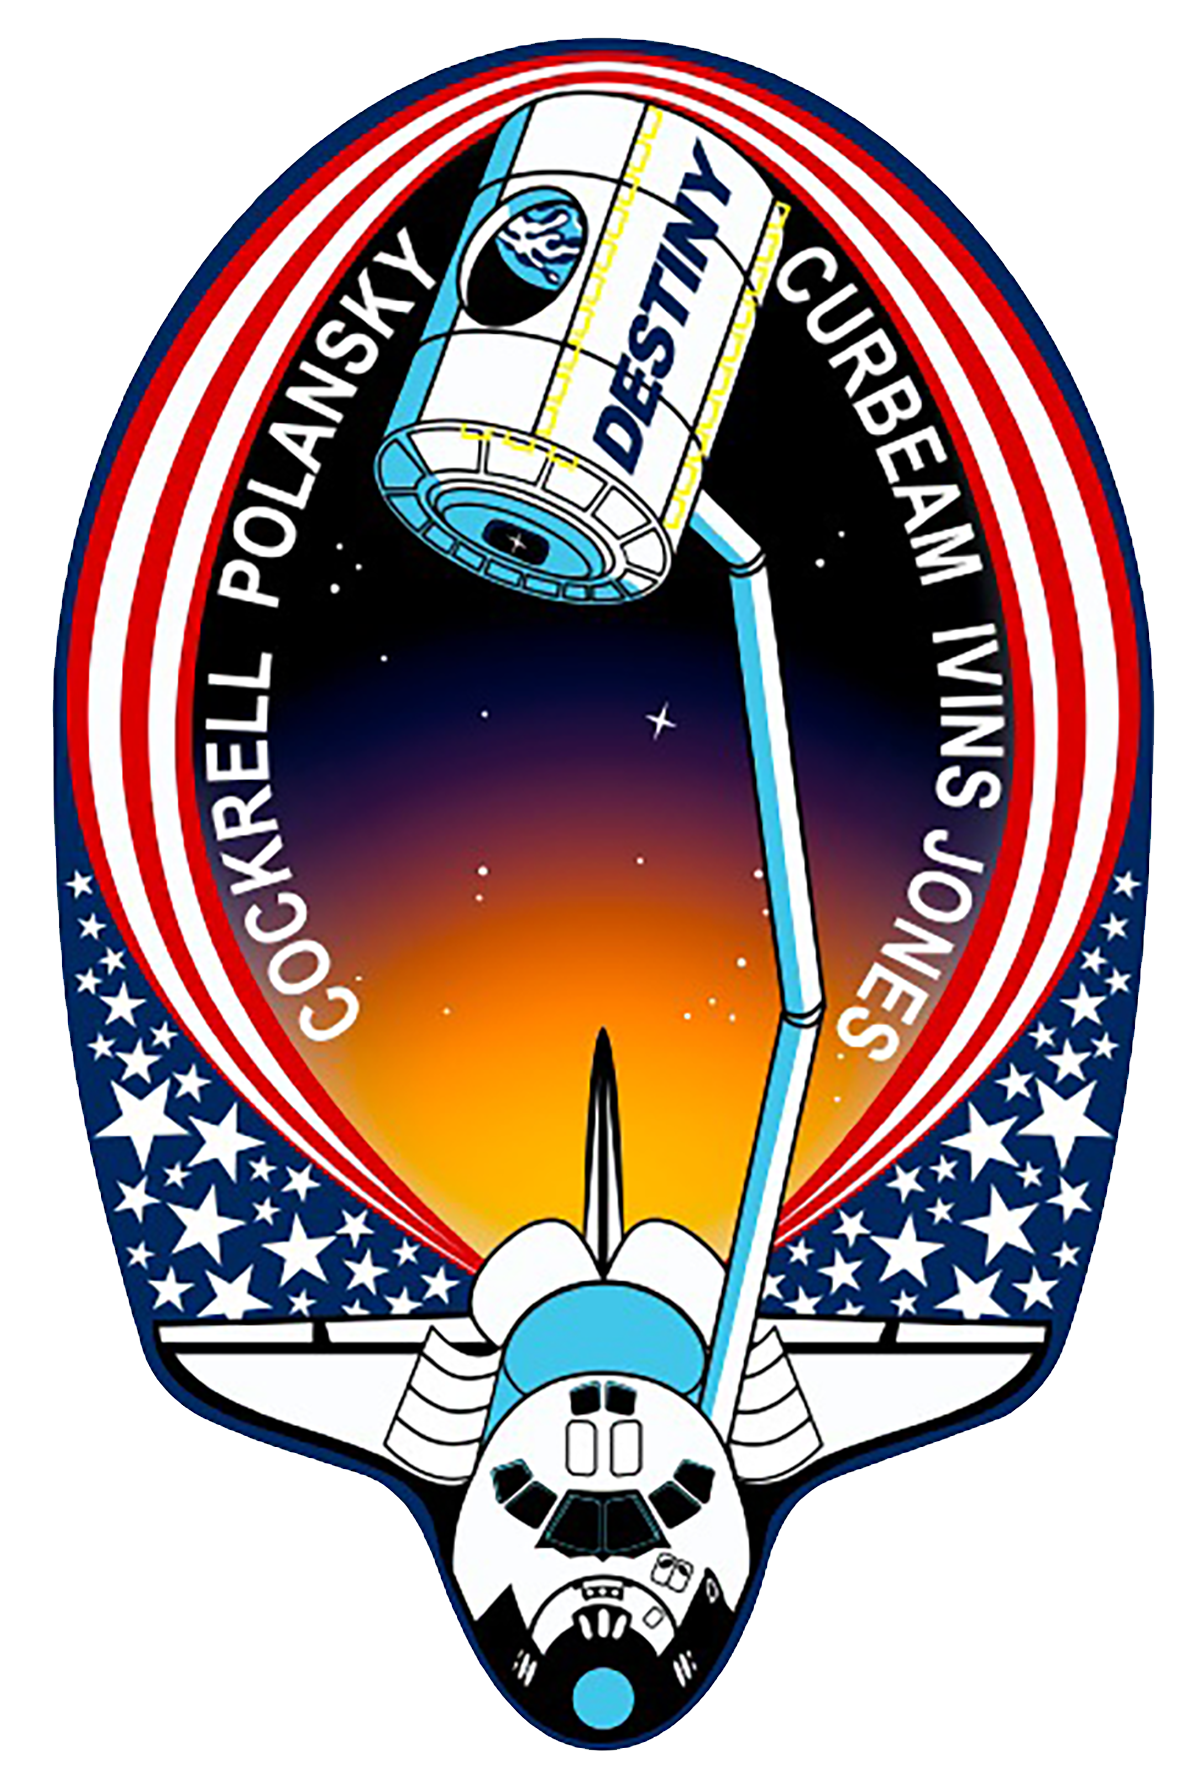 STS-98 (Atlantis)